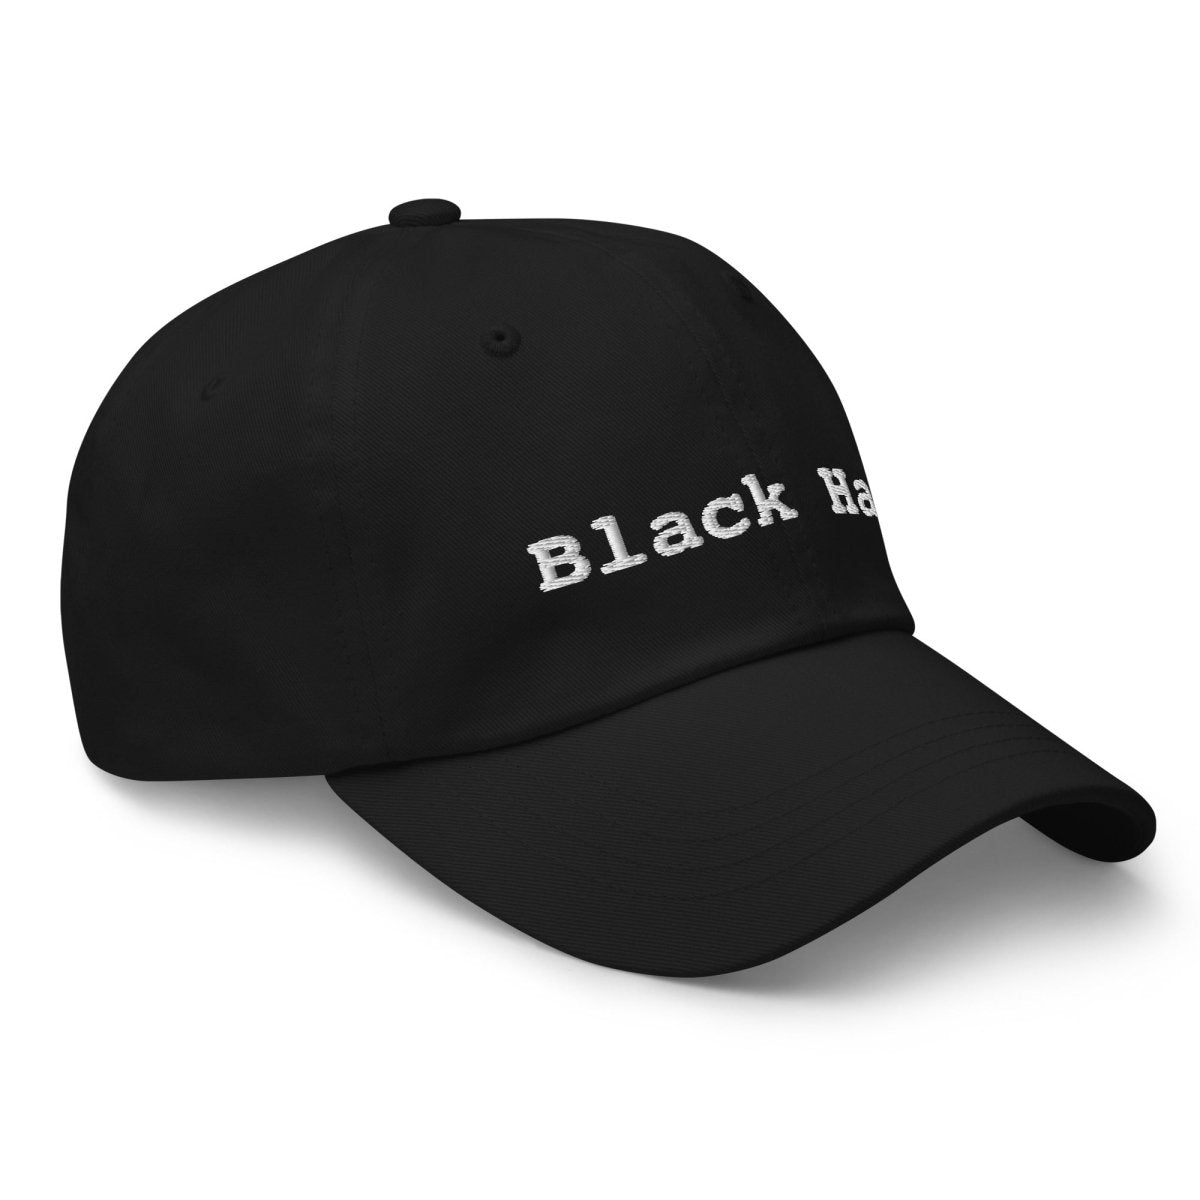 Black Hat Embroidered Cap - Black - AI Store